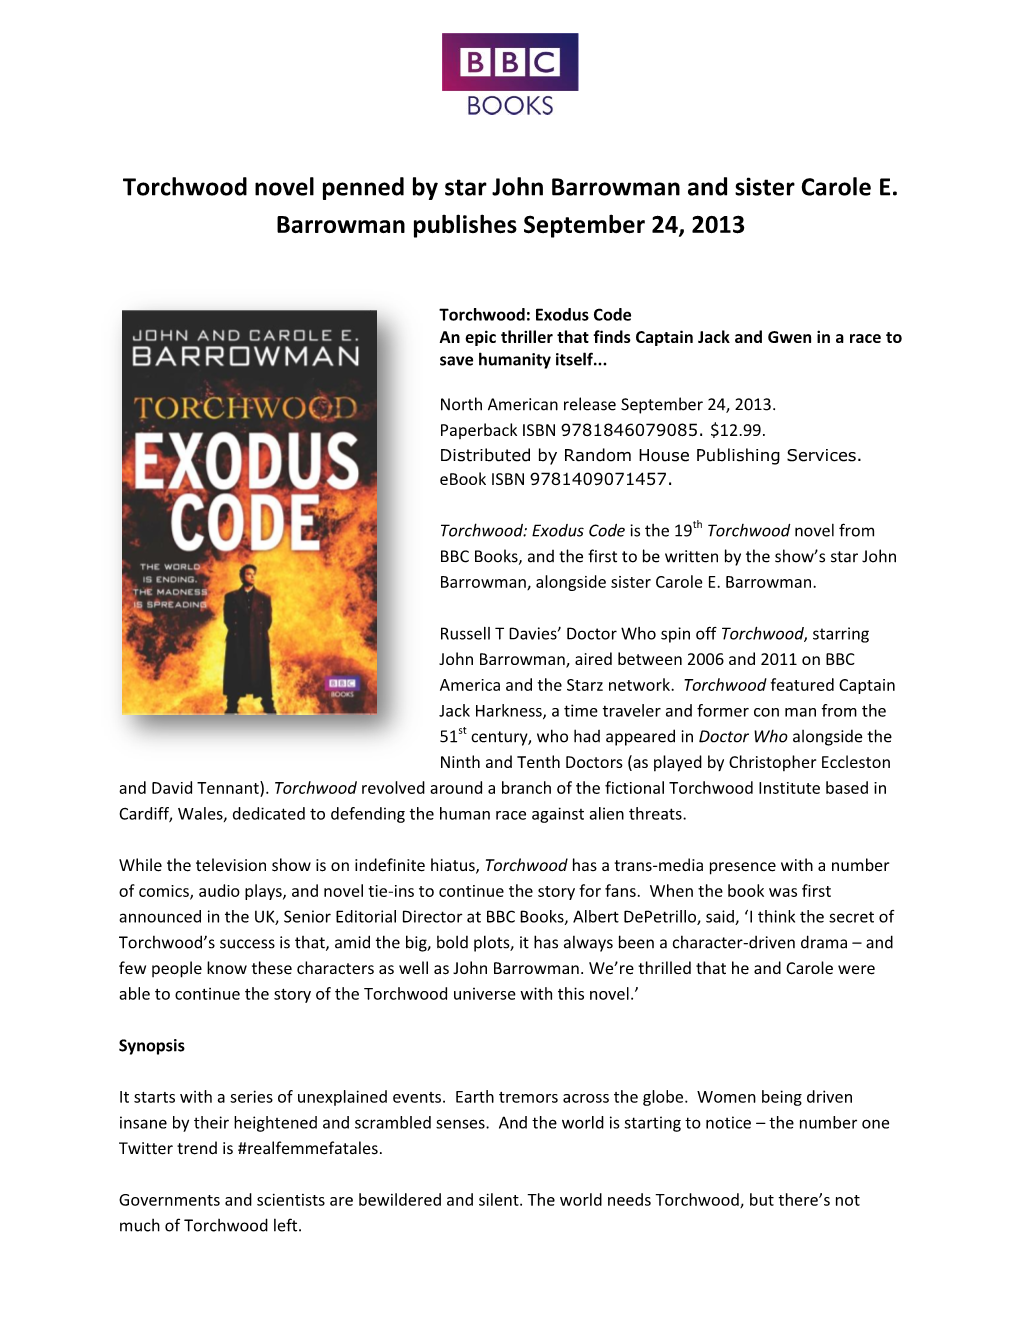 Torchwood Novel Penned by Star John Barrowman and Sister Carole E